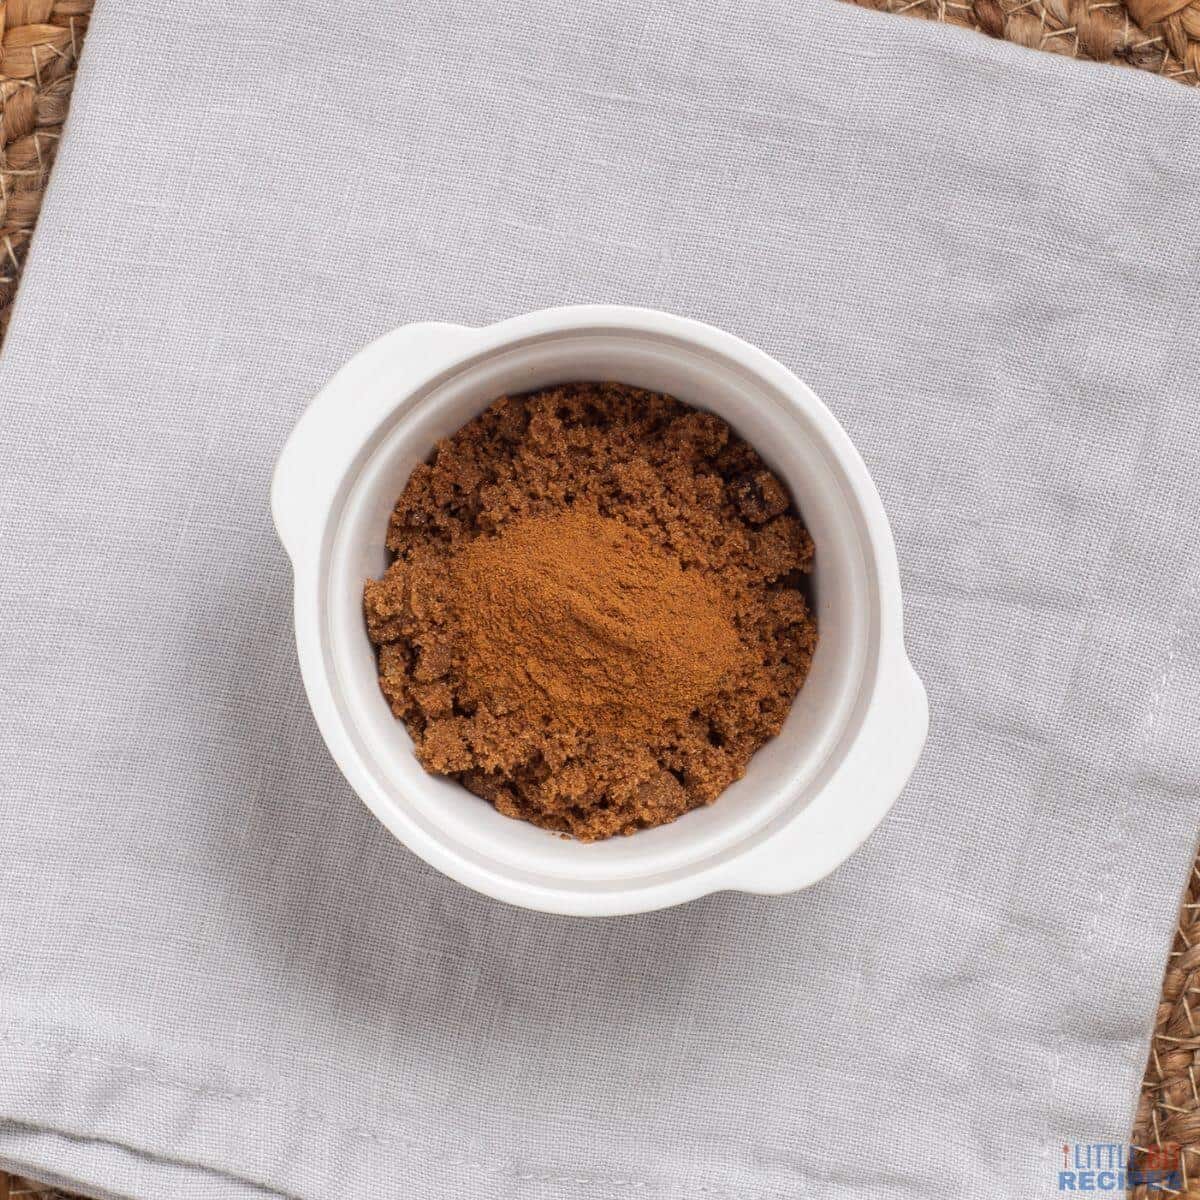 brown sugar and cinnamon in small bowl.